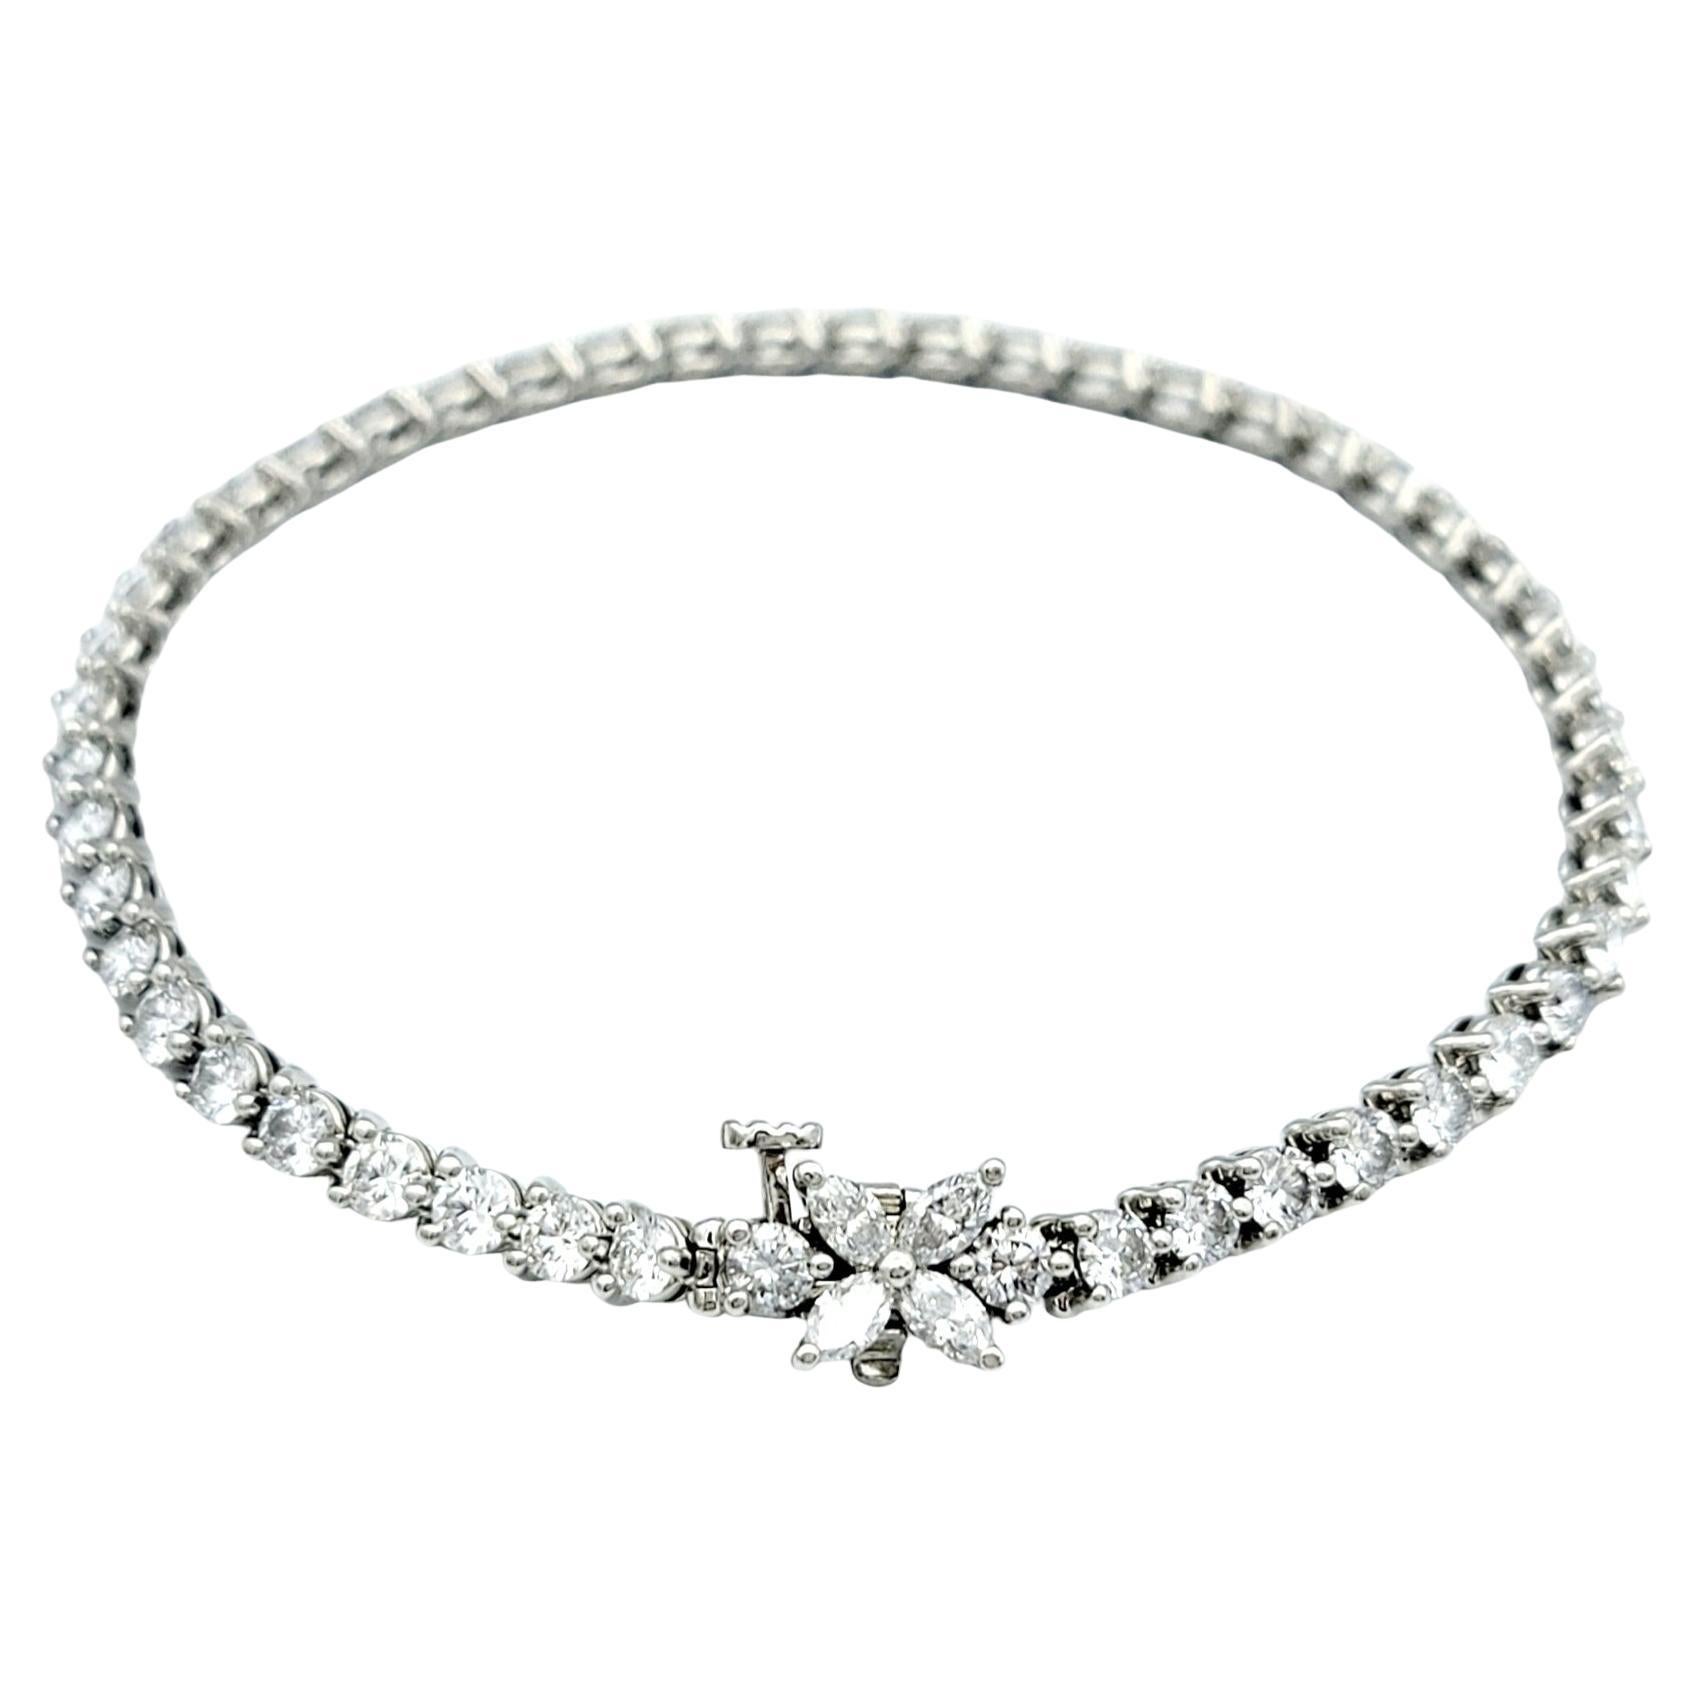 4.49 Carat Total Tiffany & Co. Victoria Diamond Tennis Bracelet Set in Platinum For Sale